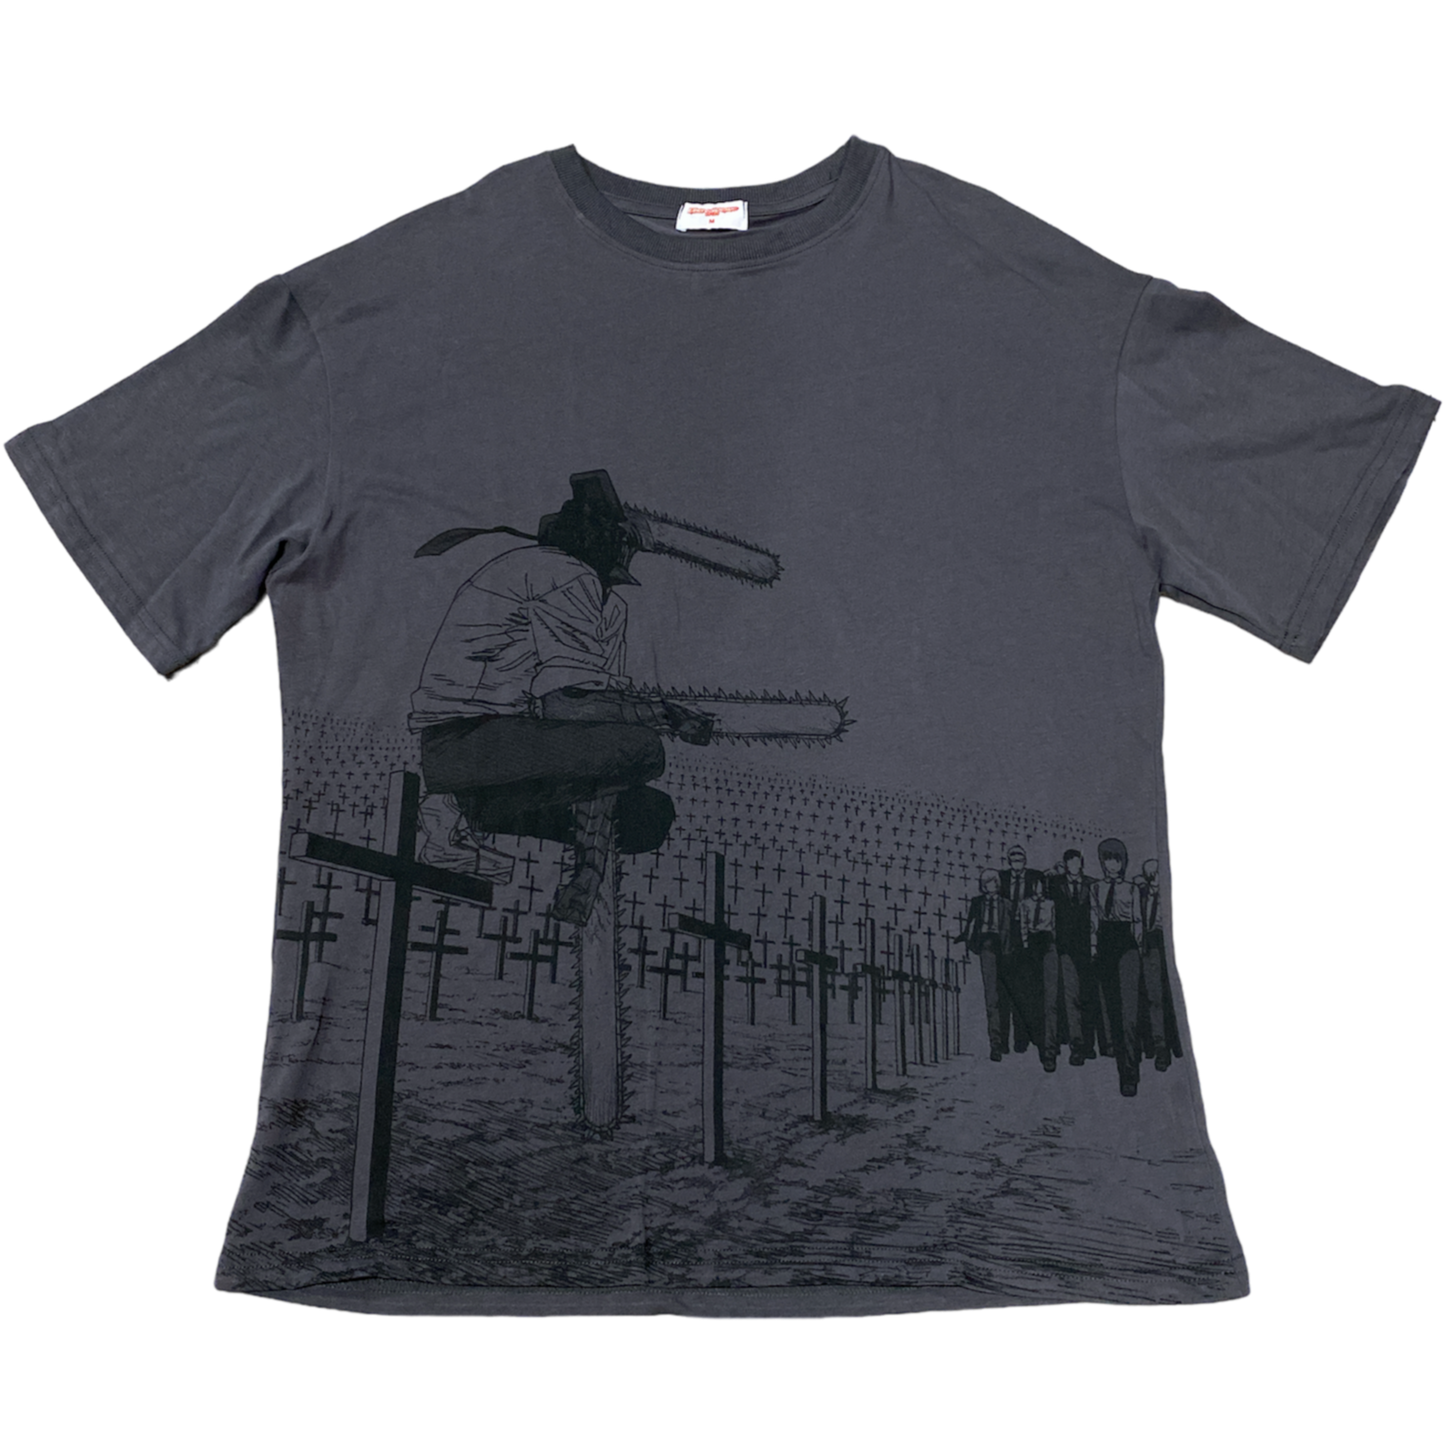 『Chainsaw-man』 "Chainsaw Graveyard" Graphic T-shirt